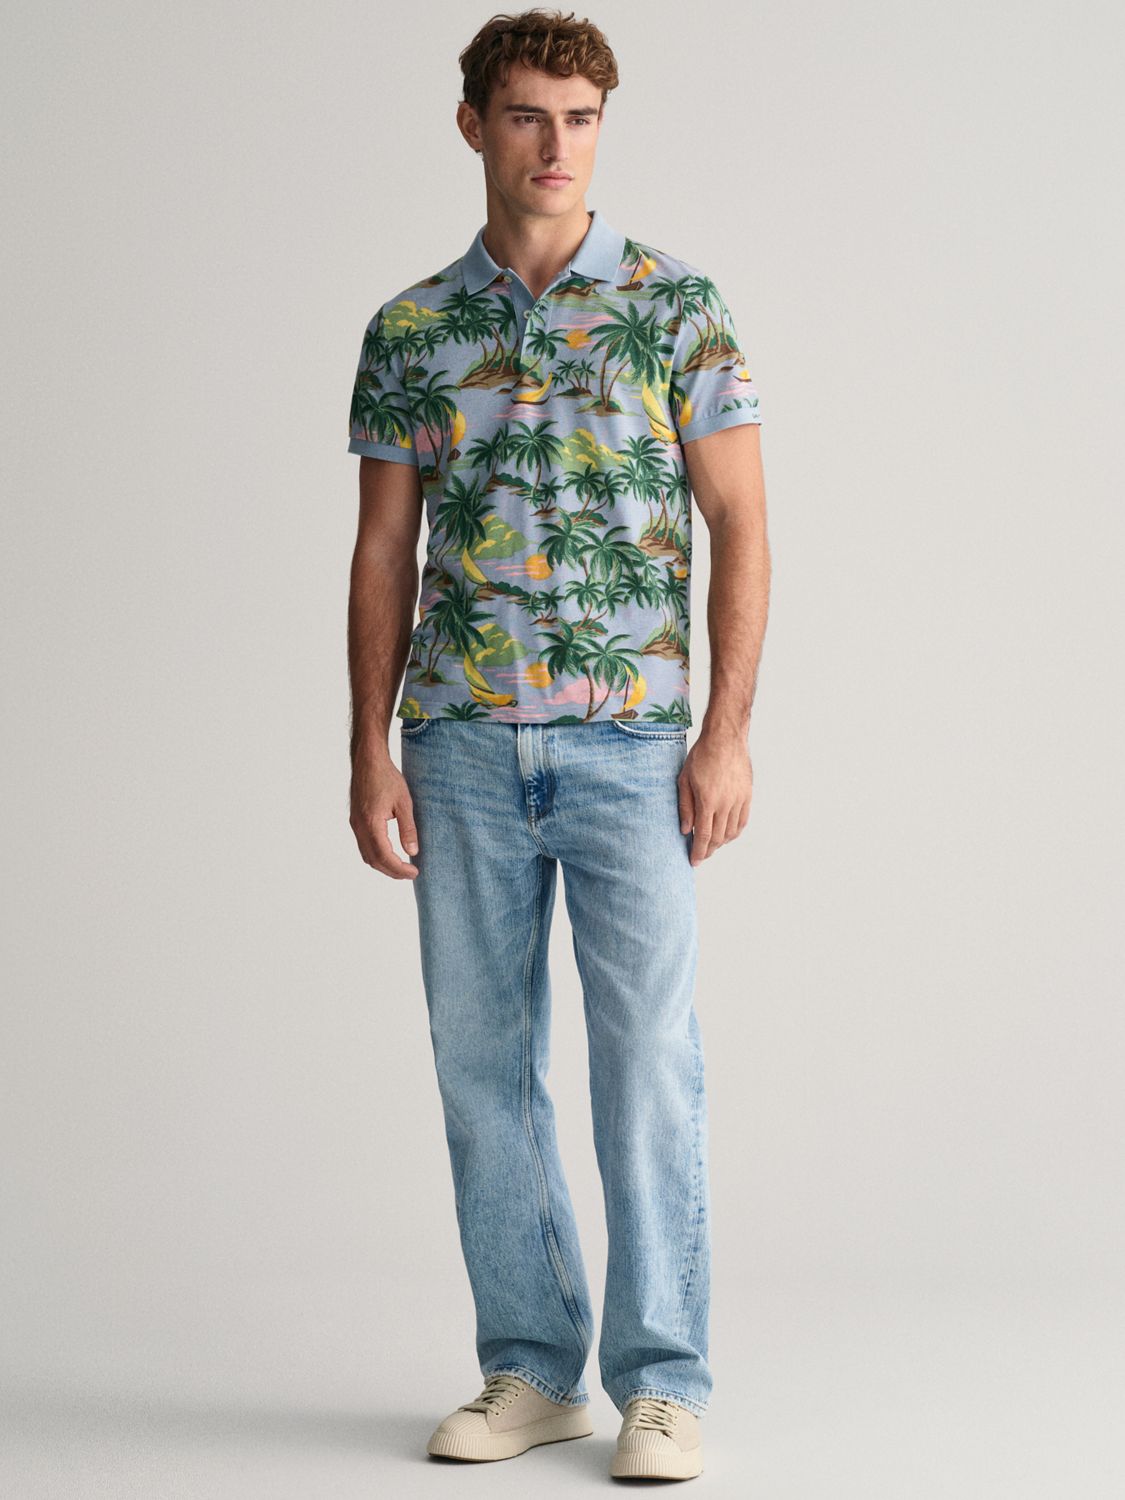 GANT Hawai Print Short Sleeve Polo Shirt, Blue/Multi, S